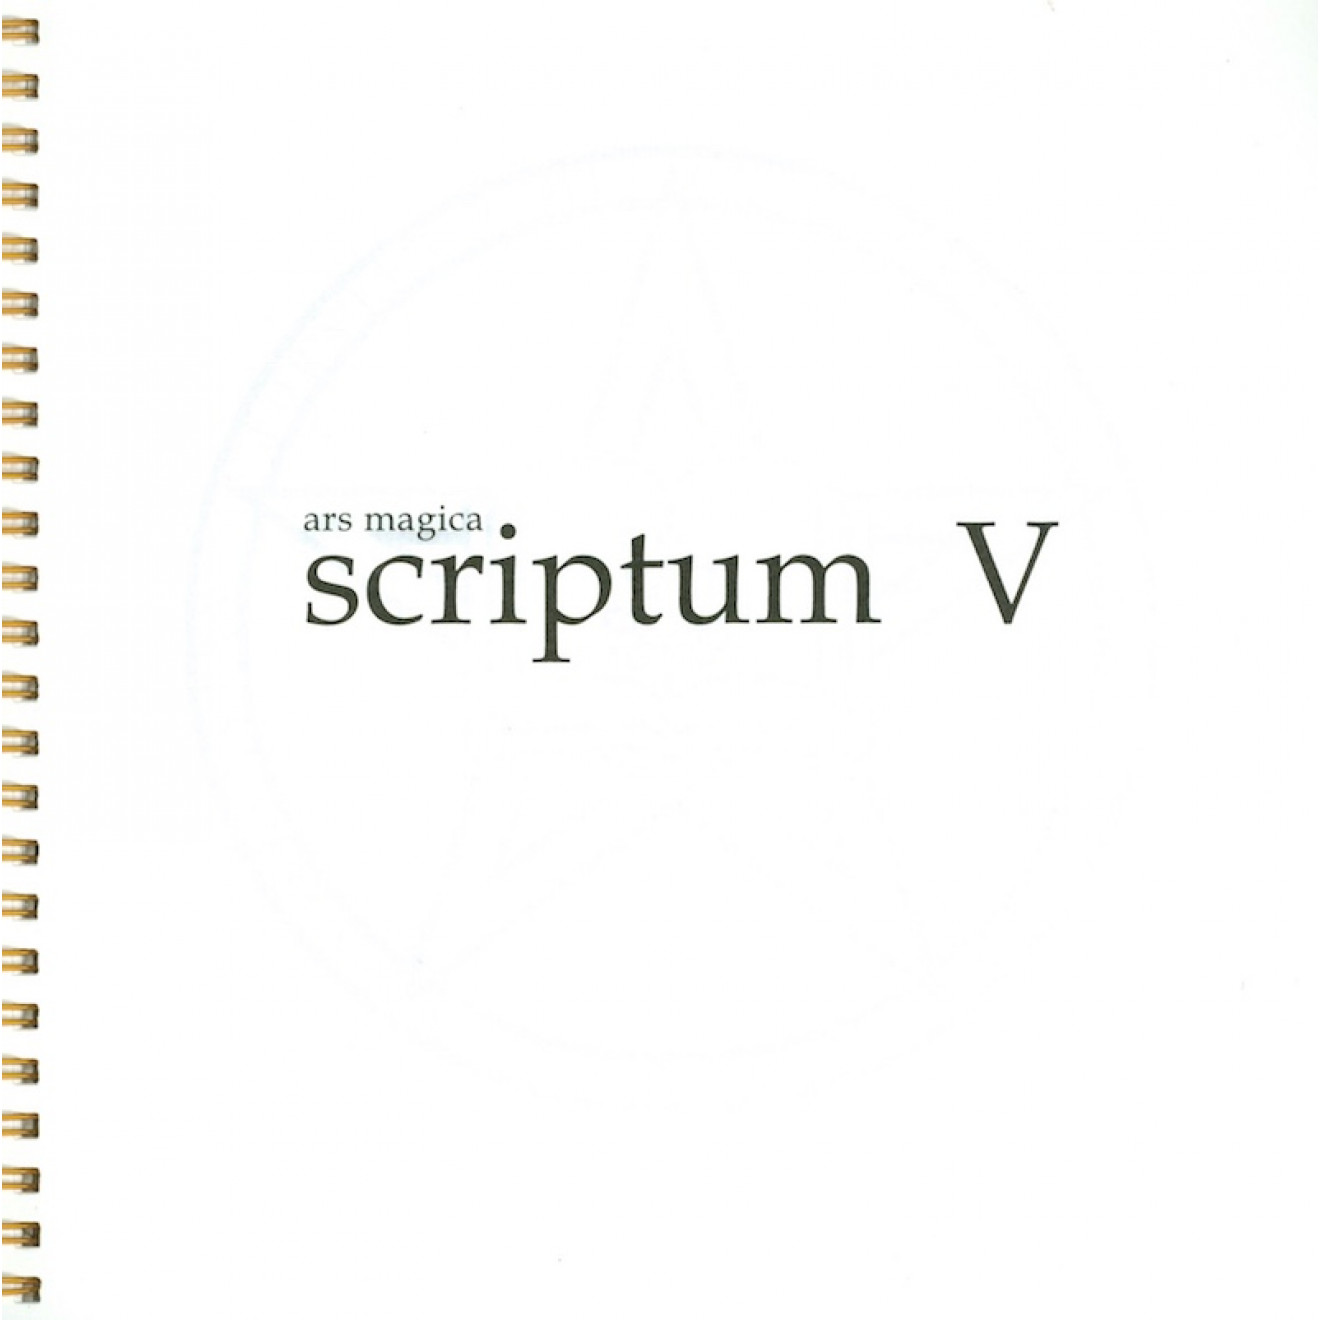 scriptum V